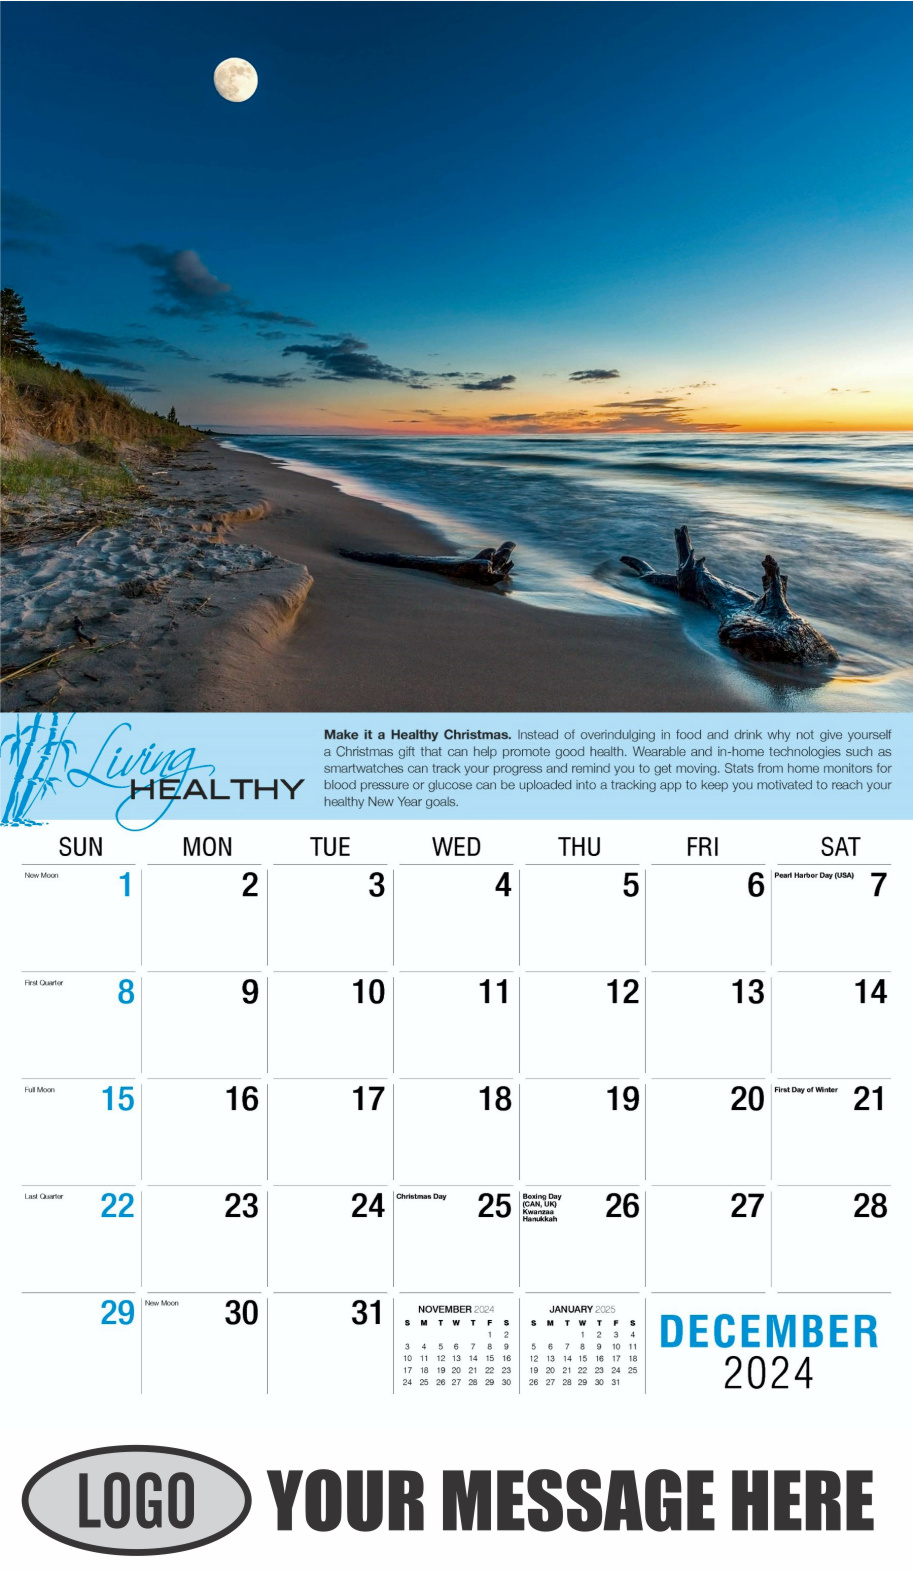 Living Healthy 2024 Business Promotional Calendar - December